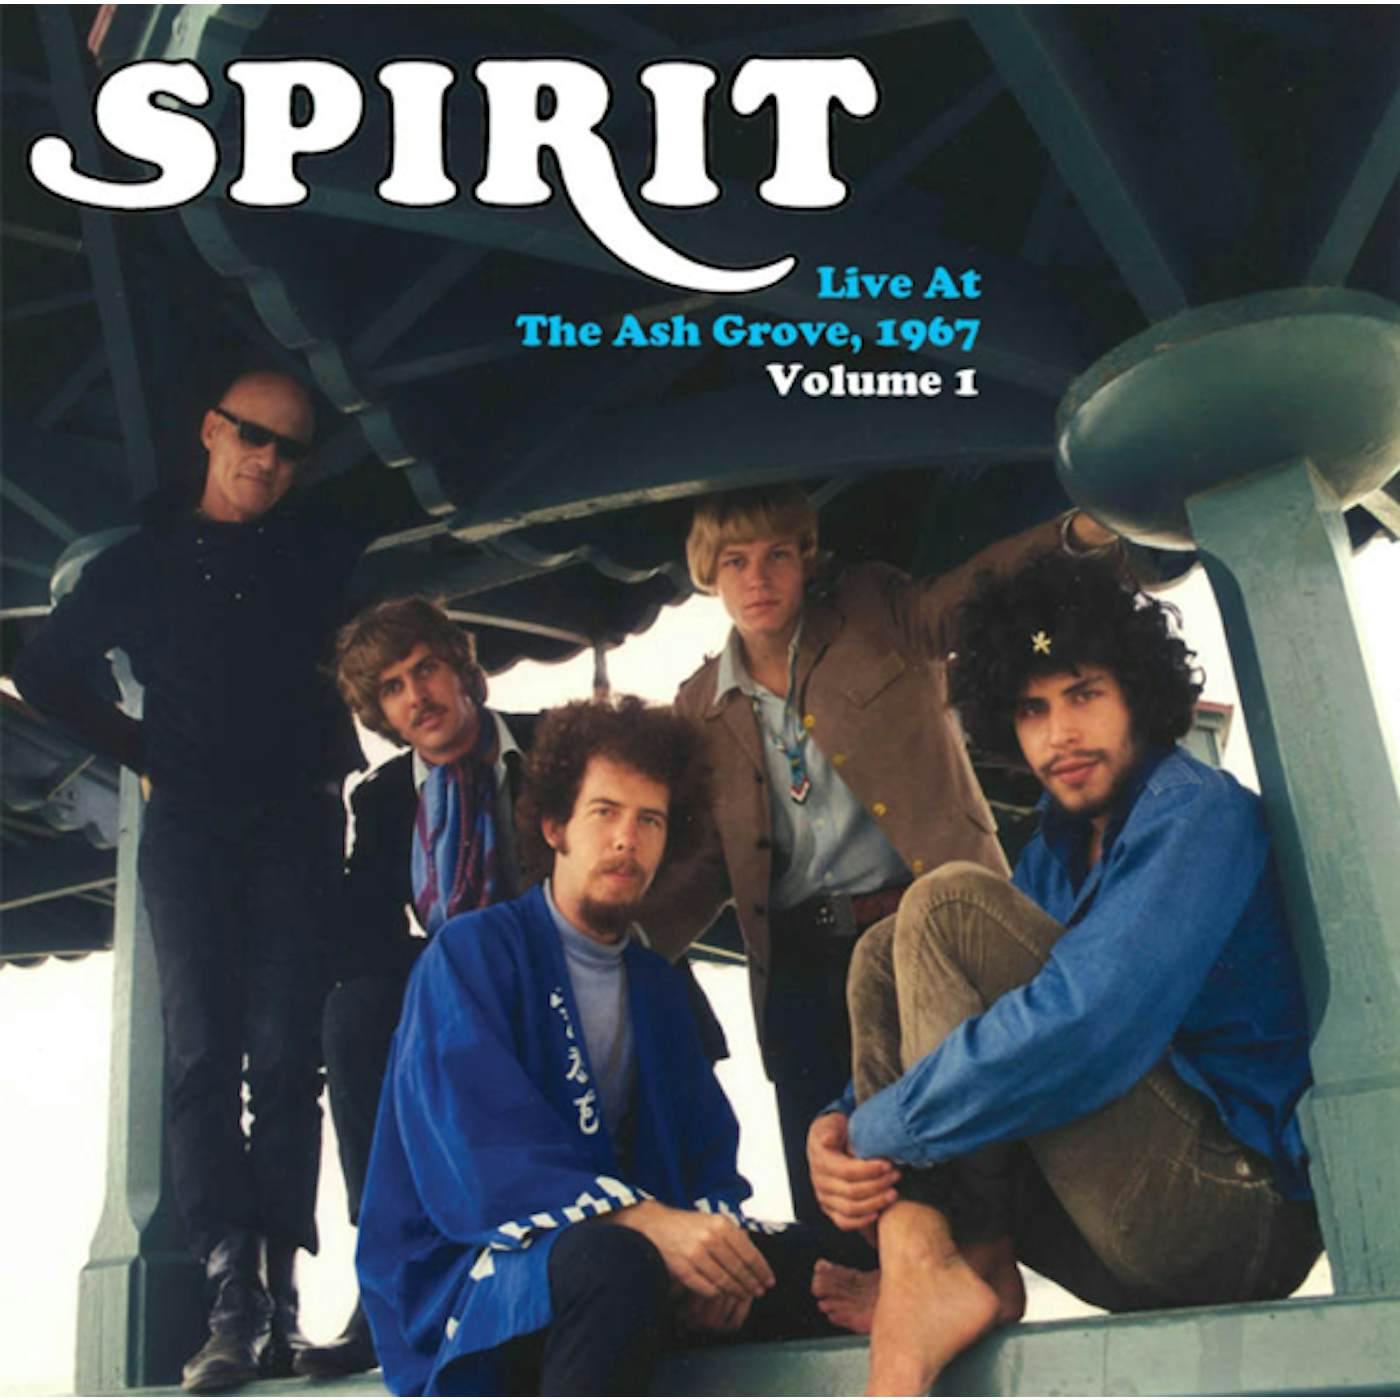 Spirit LIVE AT THE ASH GROVE 1967 VOLUME 1 CD